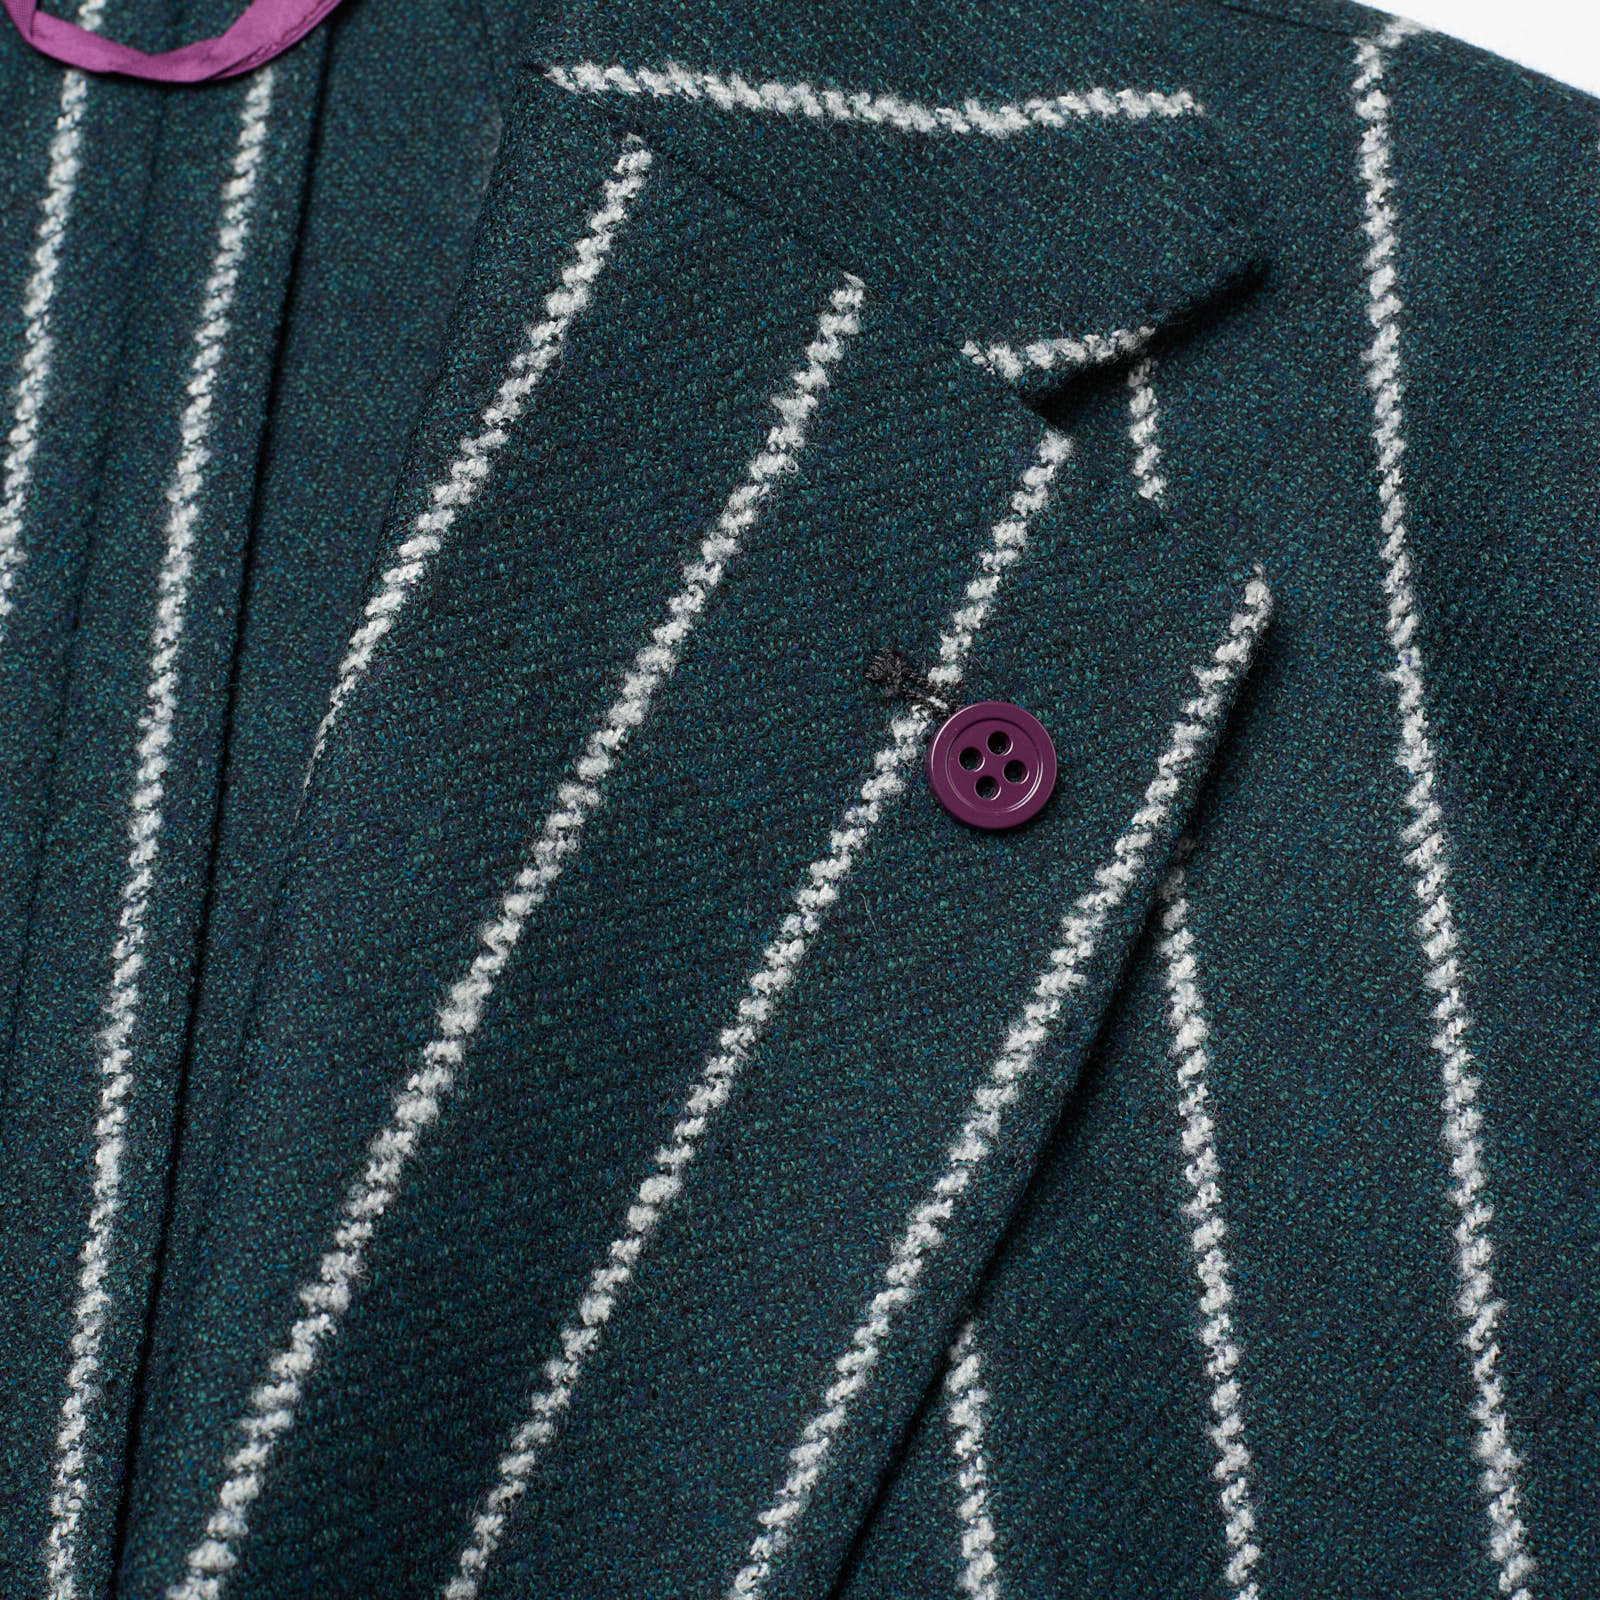 SARTORIA PARTENOPEA Bottle Green Striped Wool Jacket NEW Current Model